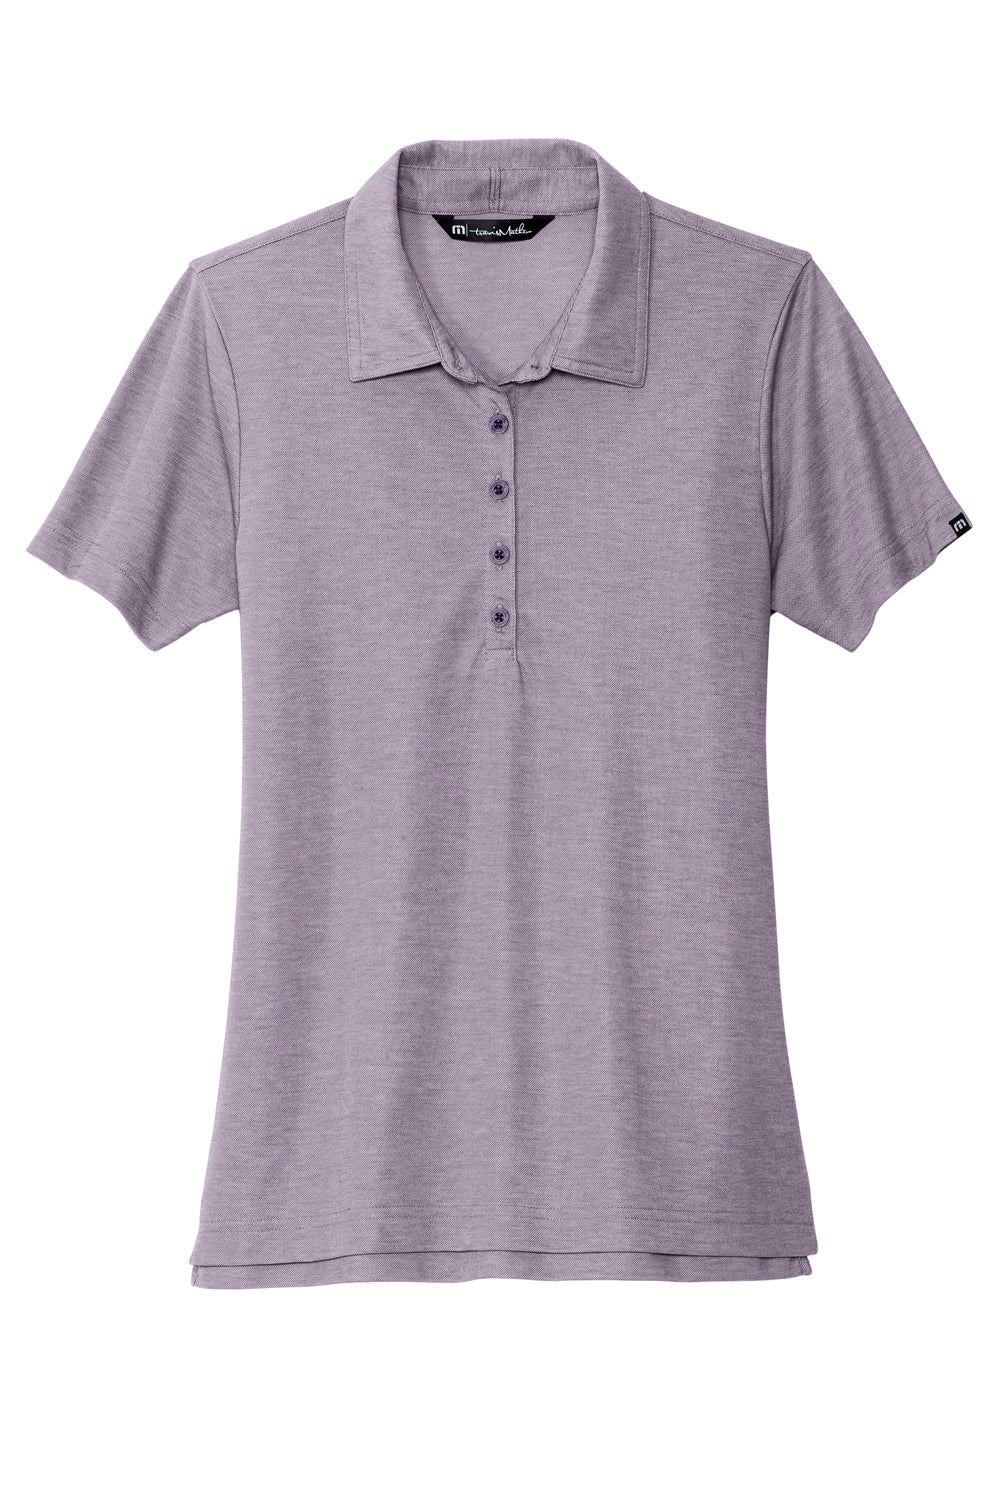 TravisMathew TM1WW002 Womens Oceanside Moisture Wicking Short Sleeve Polo Shirt Heather Sage Purple Flat Front